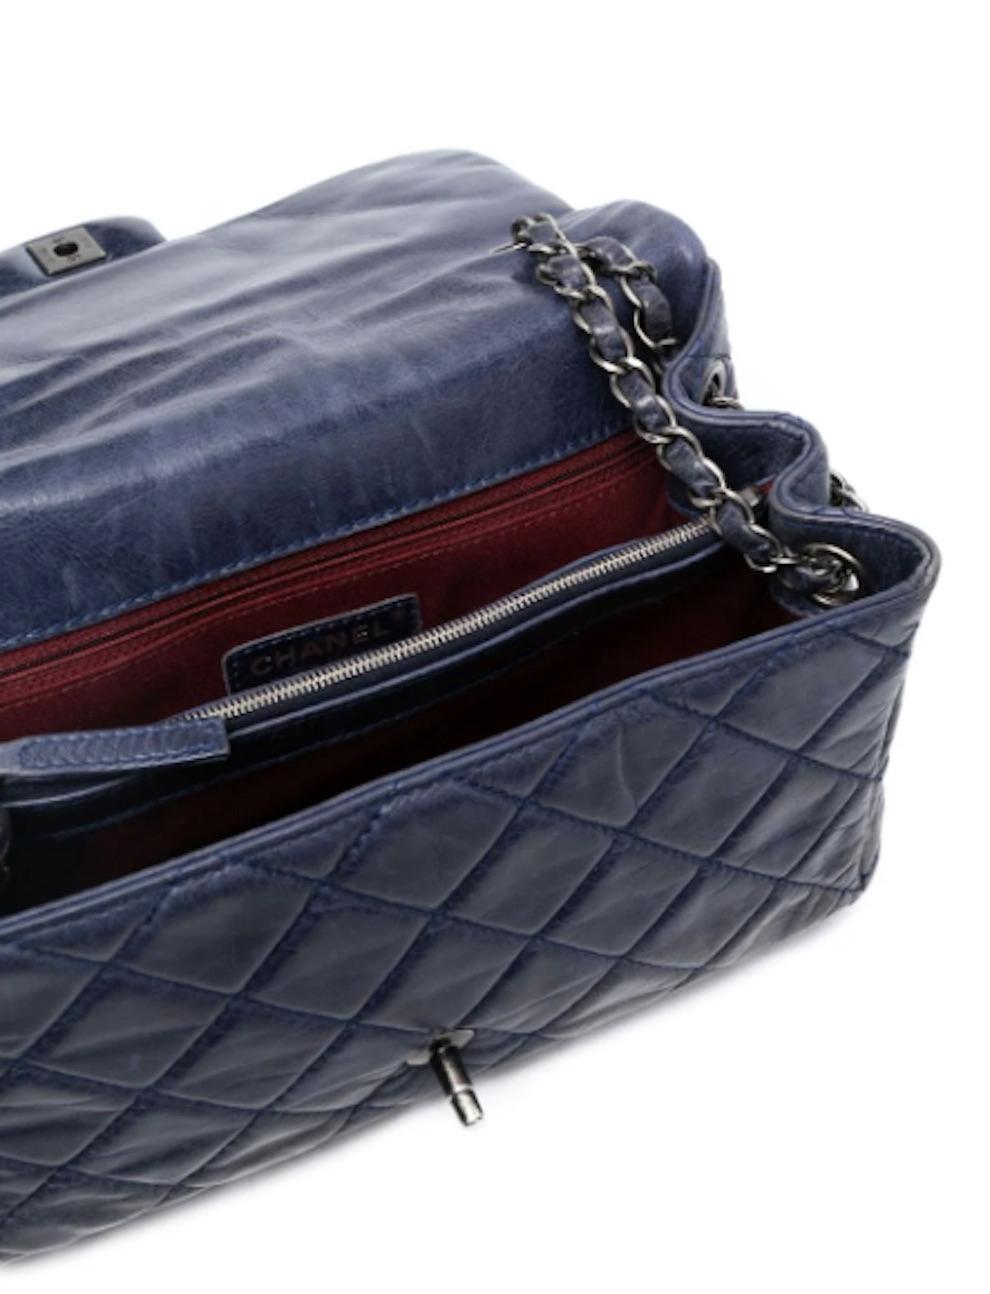 Women's Chanel Blue Jean Leather Timeless Bag